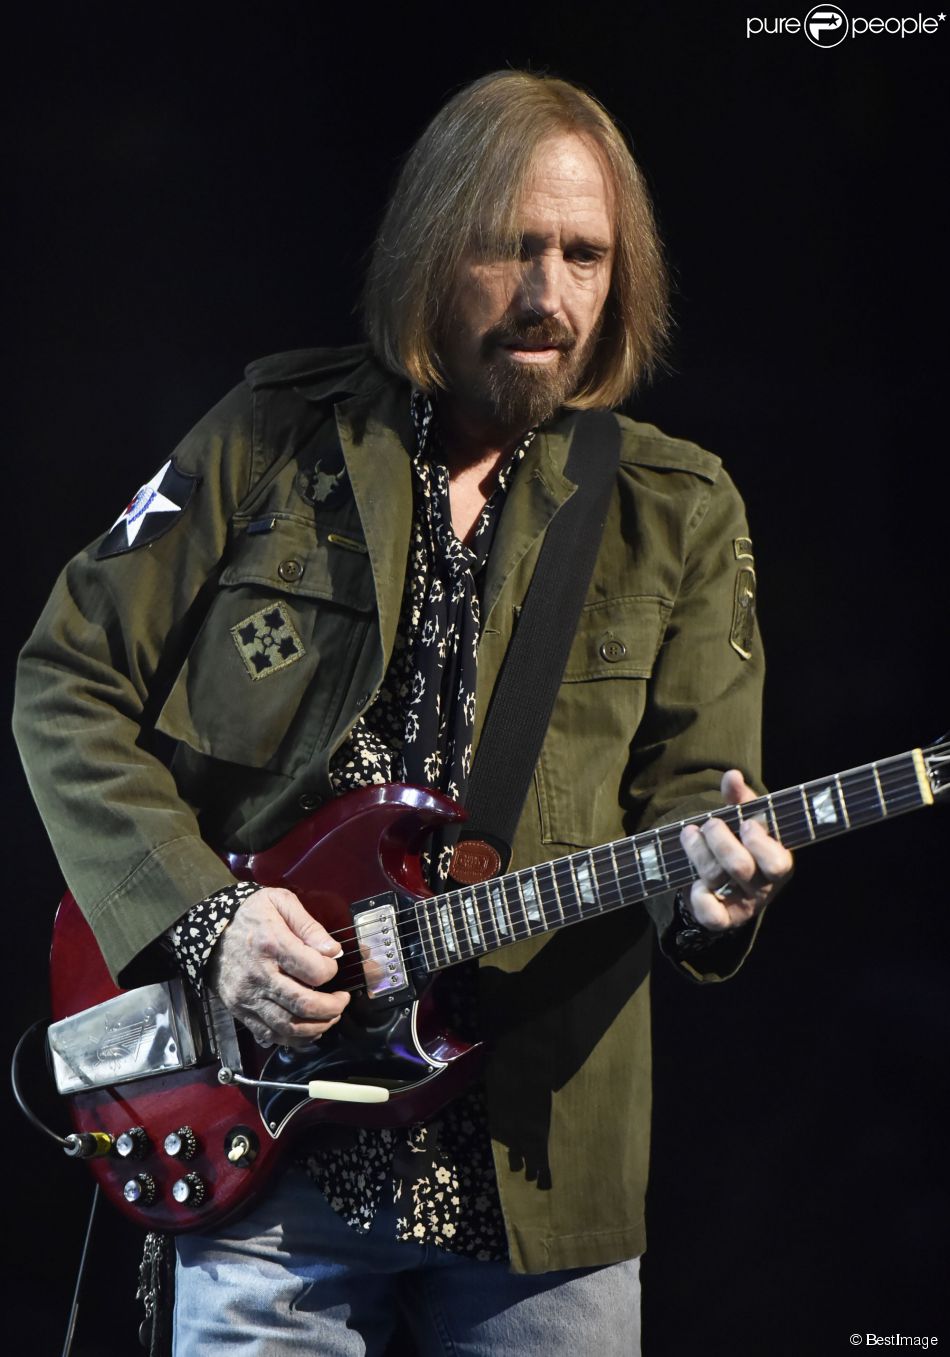  Tom Petty et son groupe Heartbreakers en concert &amp;agrave; Chicago. Le 23 ao&amp;ucirc;t 2014  